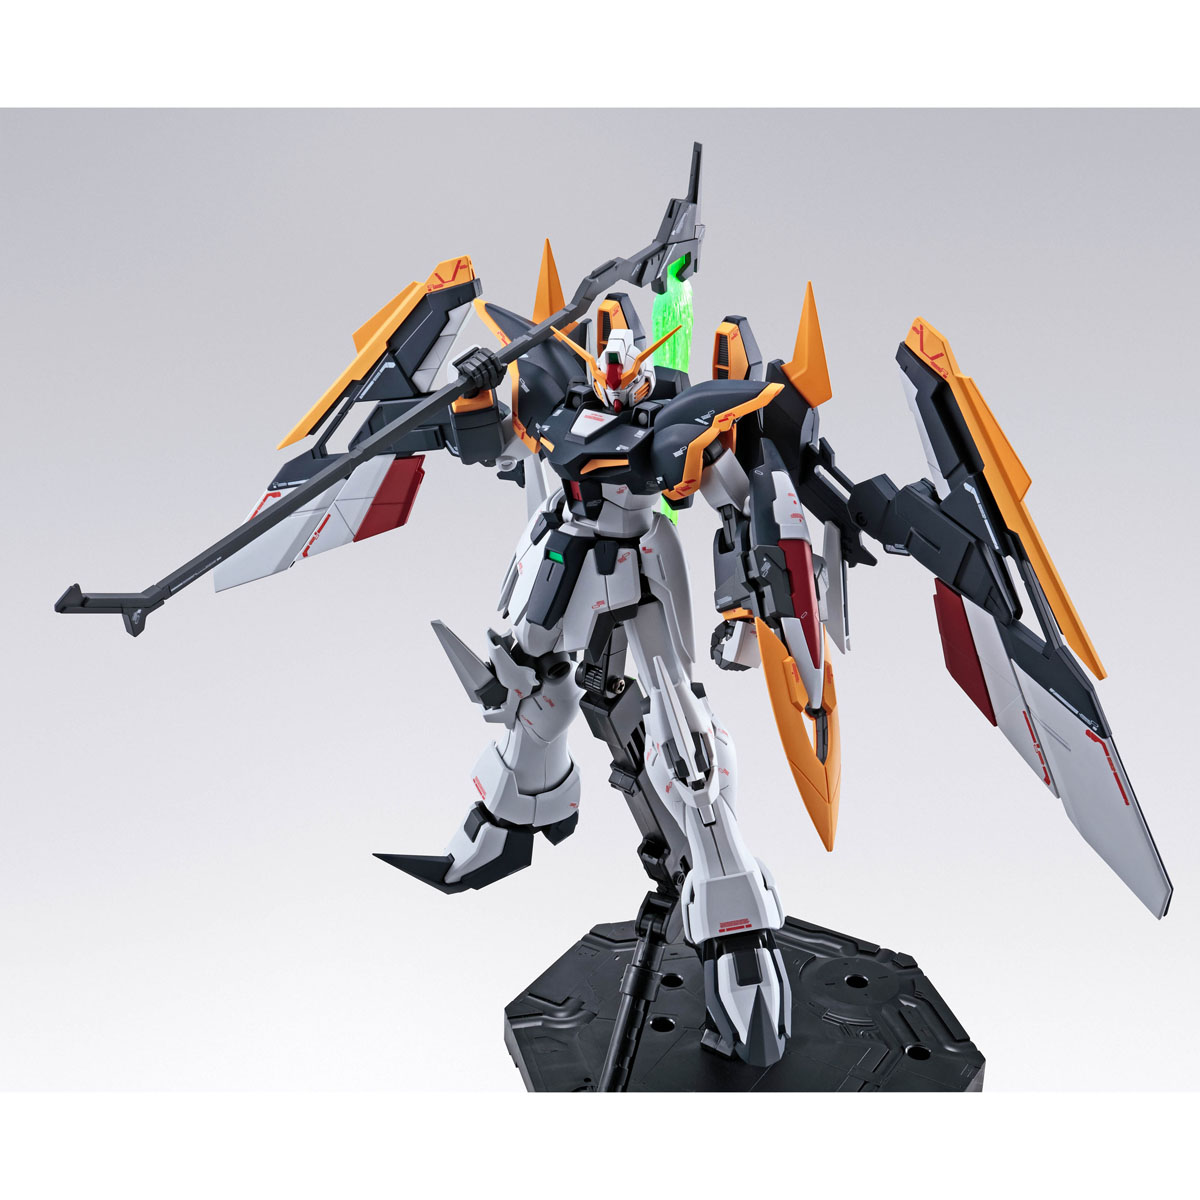 Mg 1 100 Gundam Deathscythe Ew Roussette Unit Gundam Premium Bandai Singapore Online Store For Action Figures Model Kits Toys And More